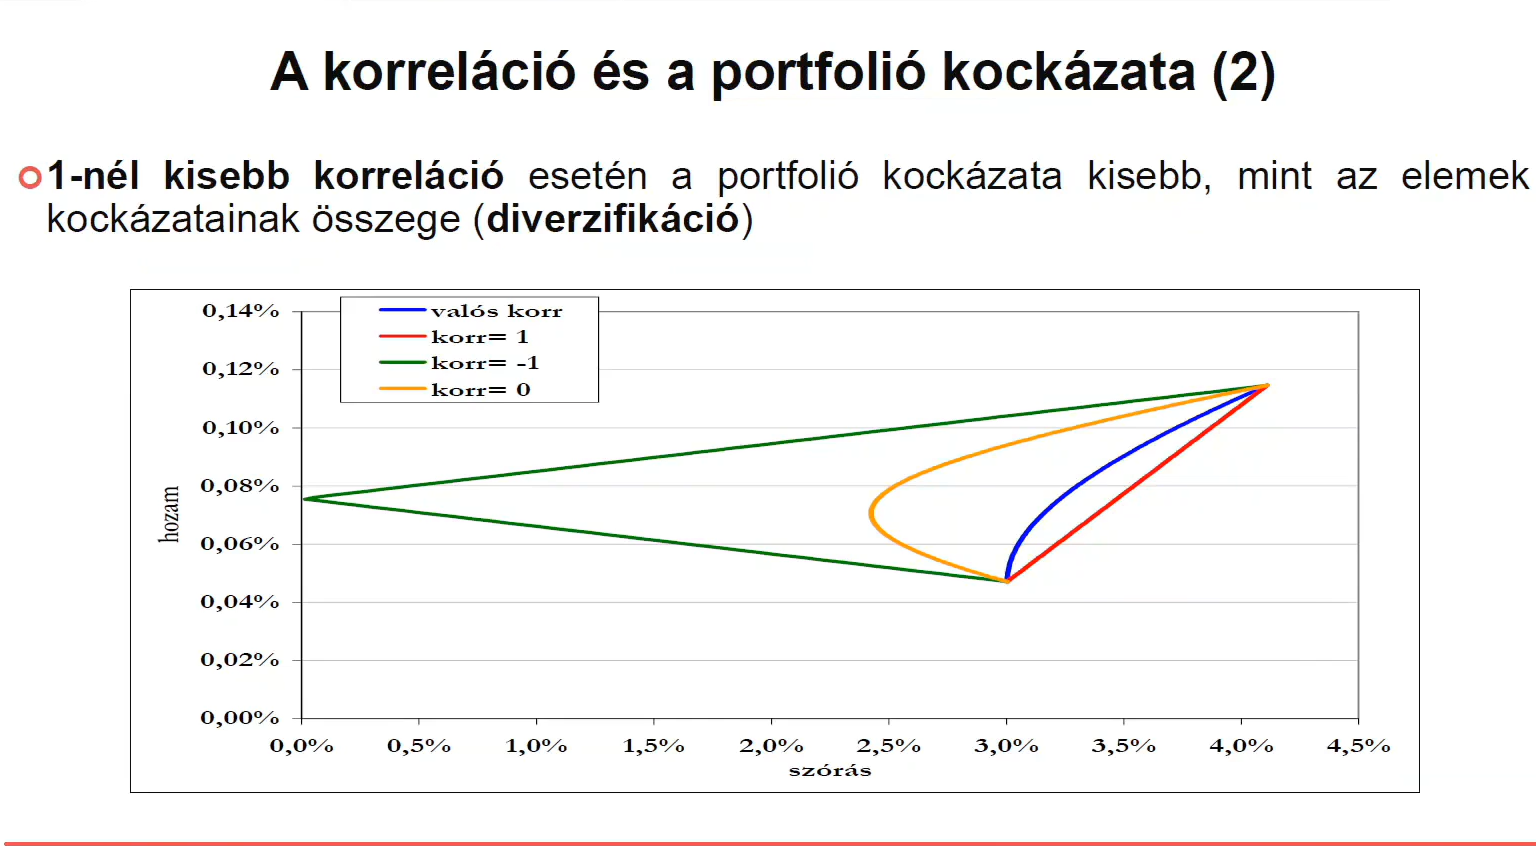 piaci-alaposszefuggesek-es-portfolioelmelet-2.png